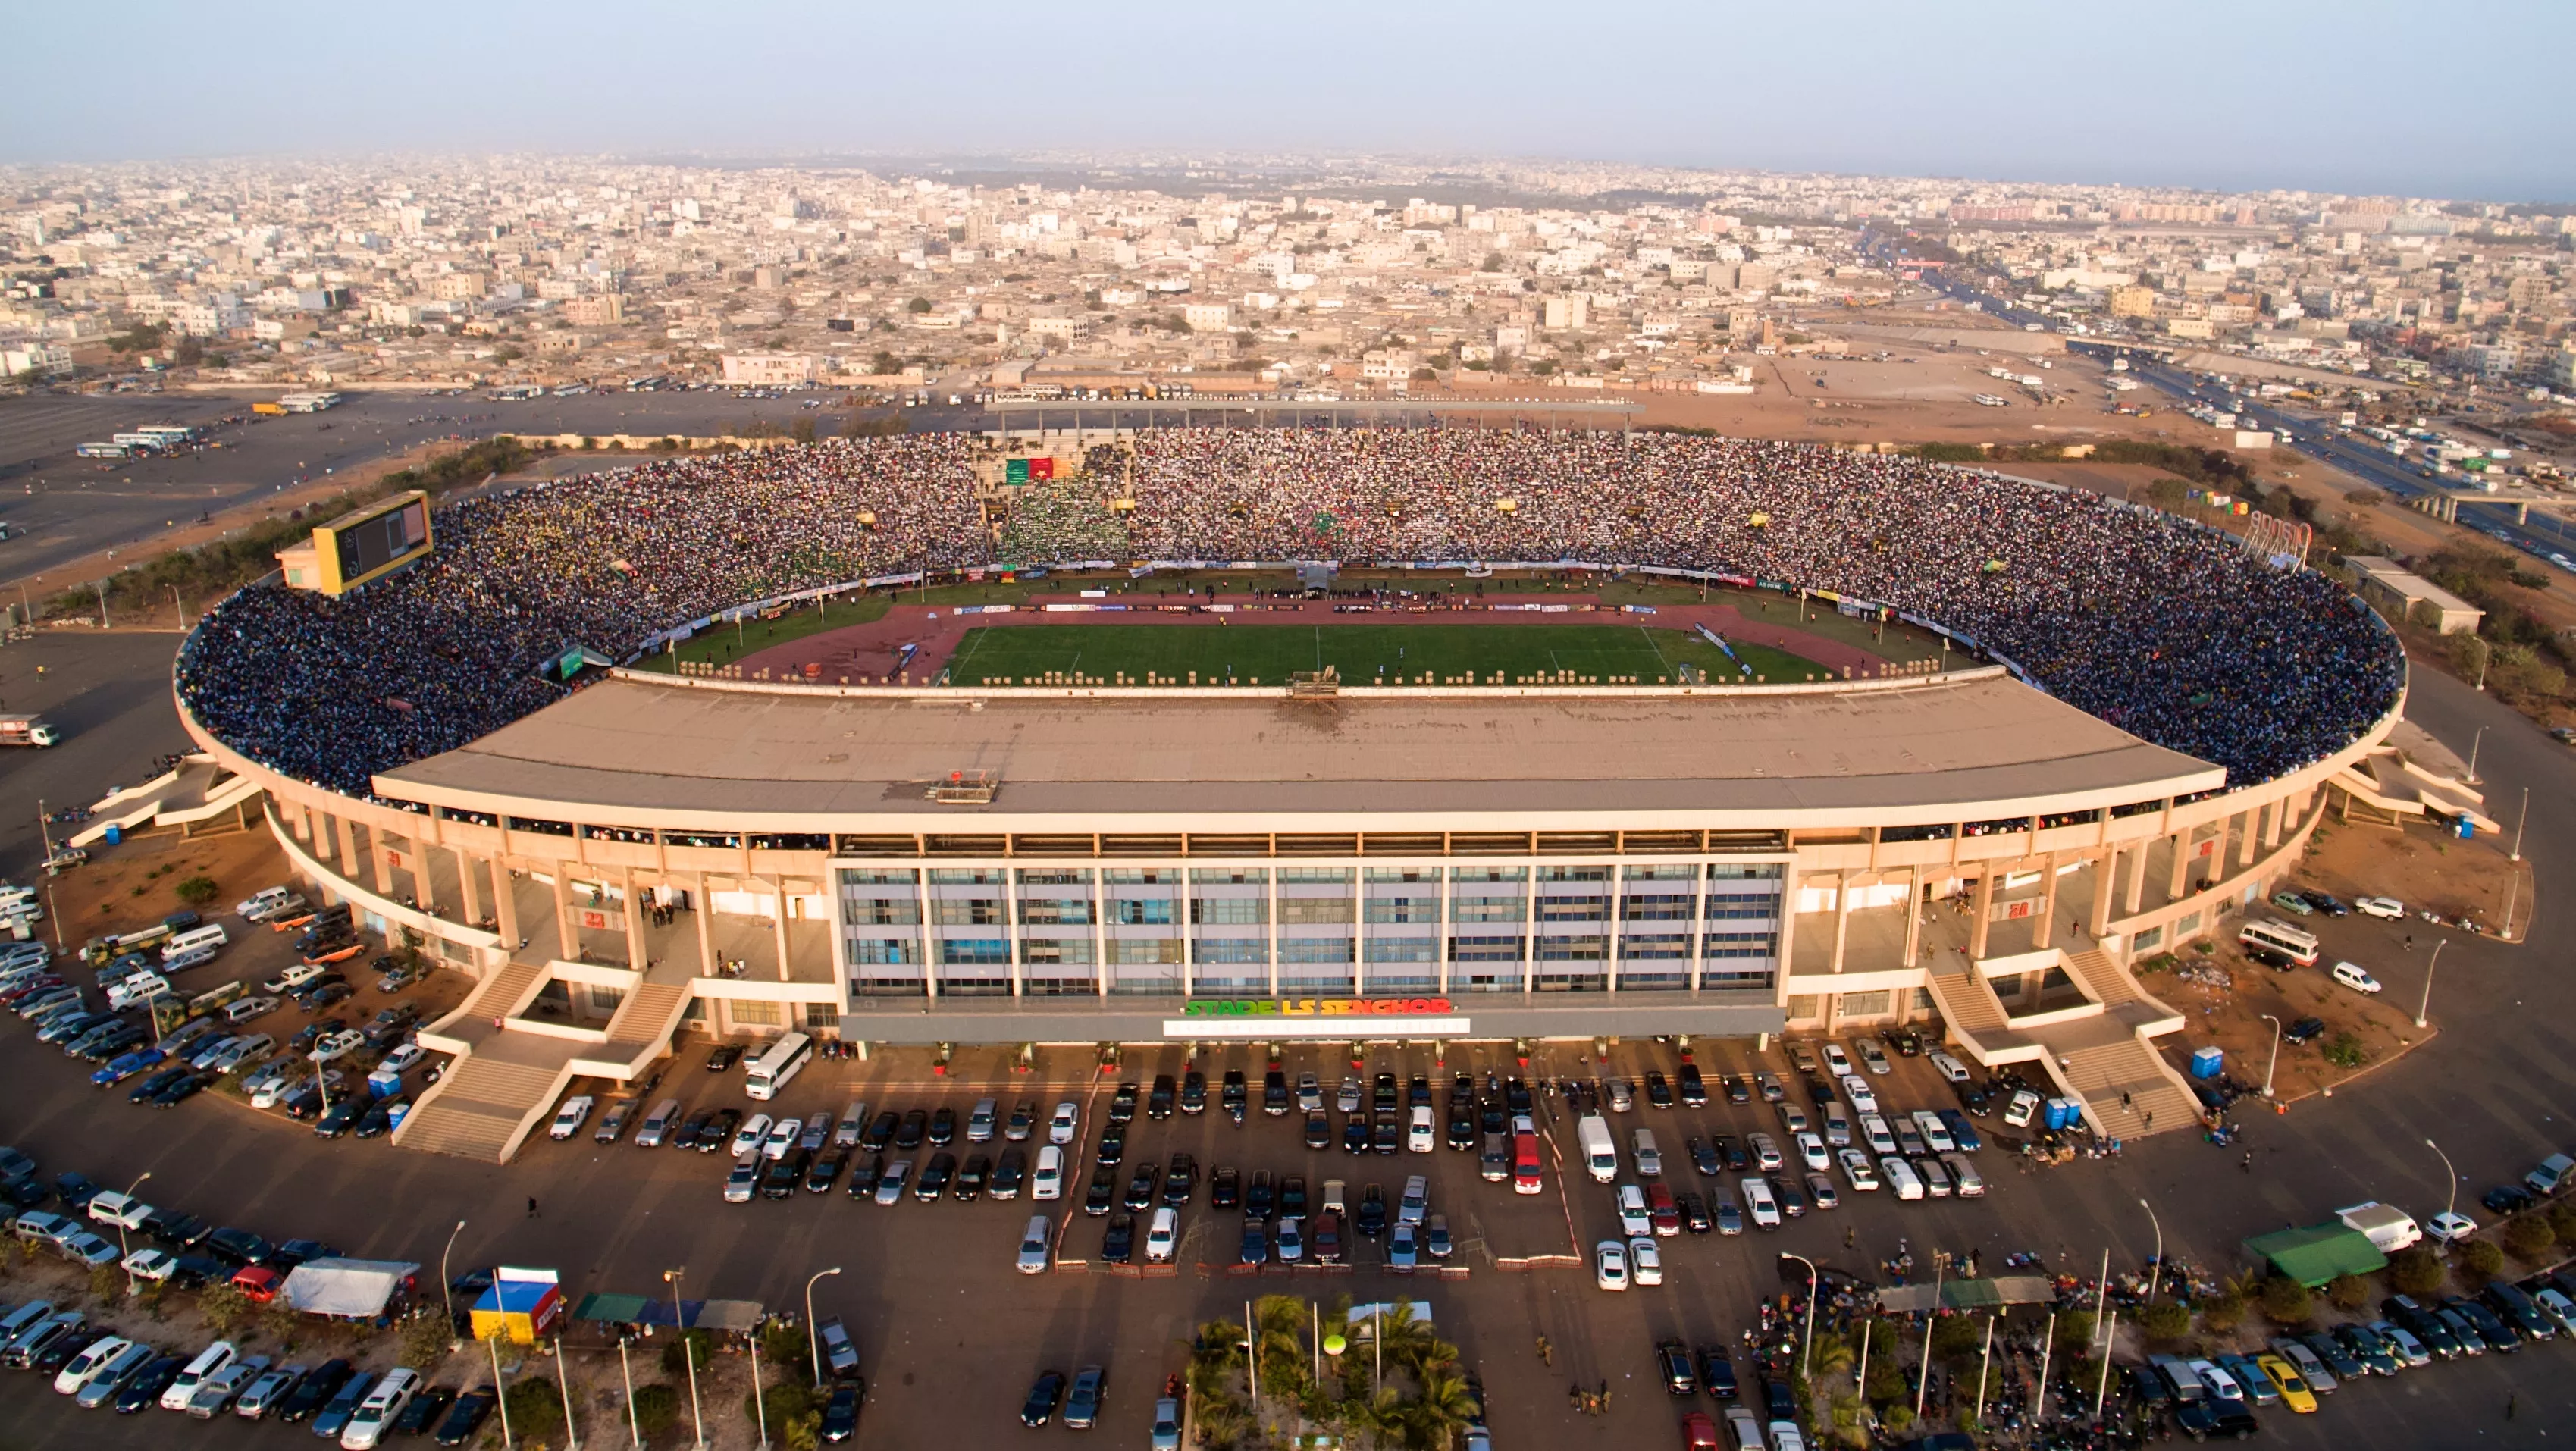 Stade Leopold Sedar Senghor in Senegal, Africa | Football - Rated 3.3